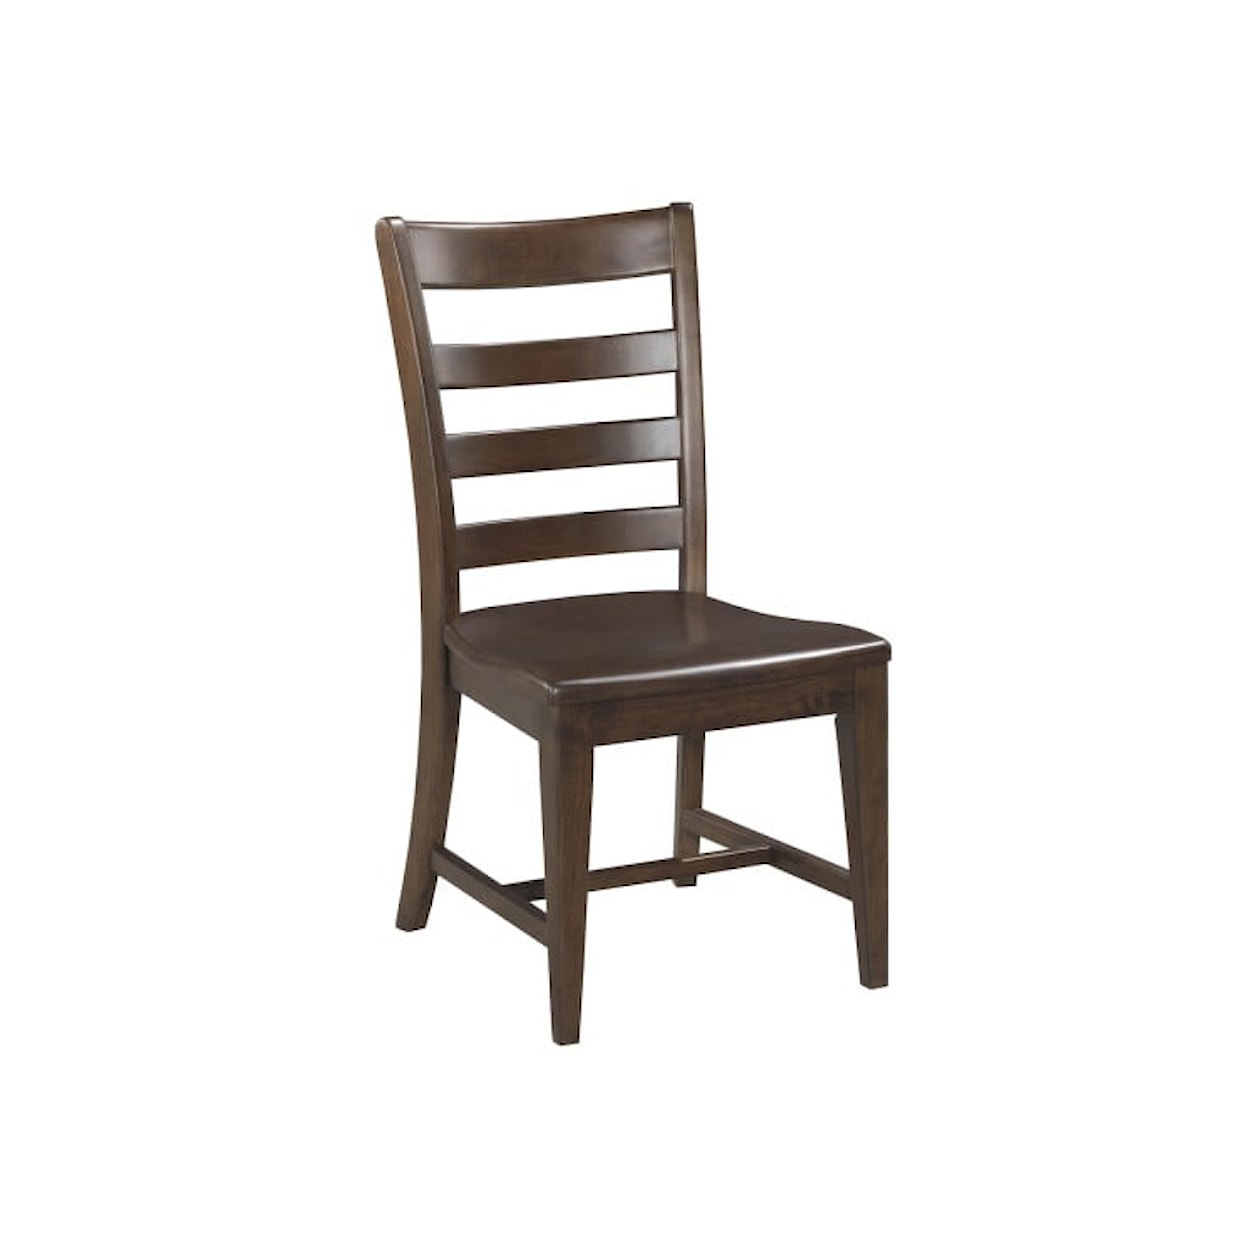 Kincaid Furniture Kafe' Ladderback Chair, Mocha